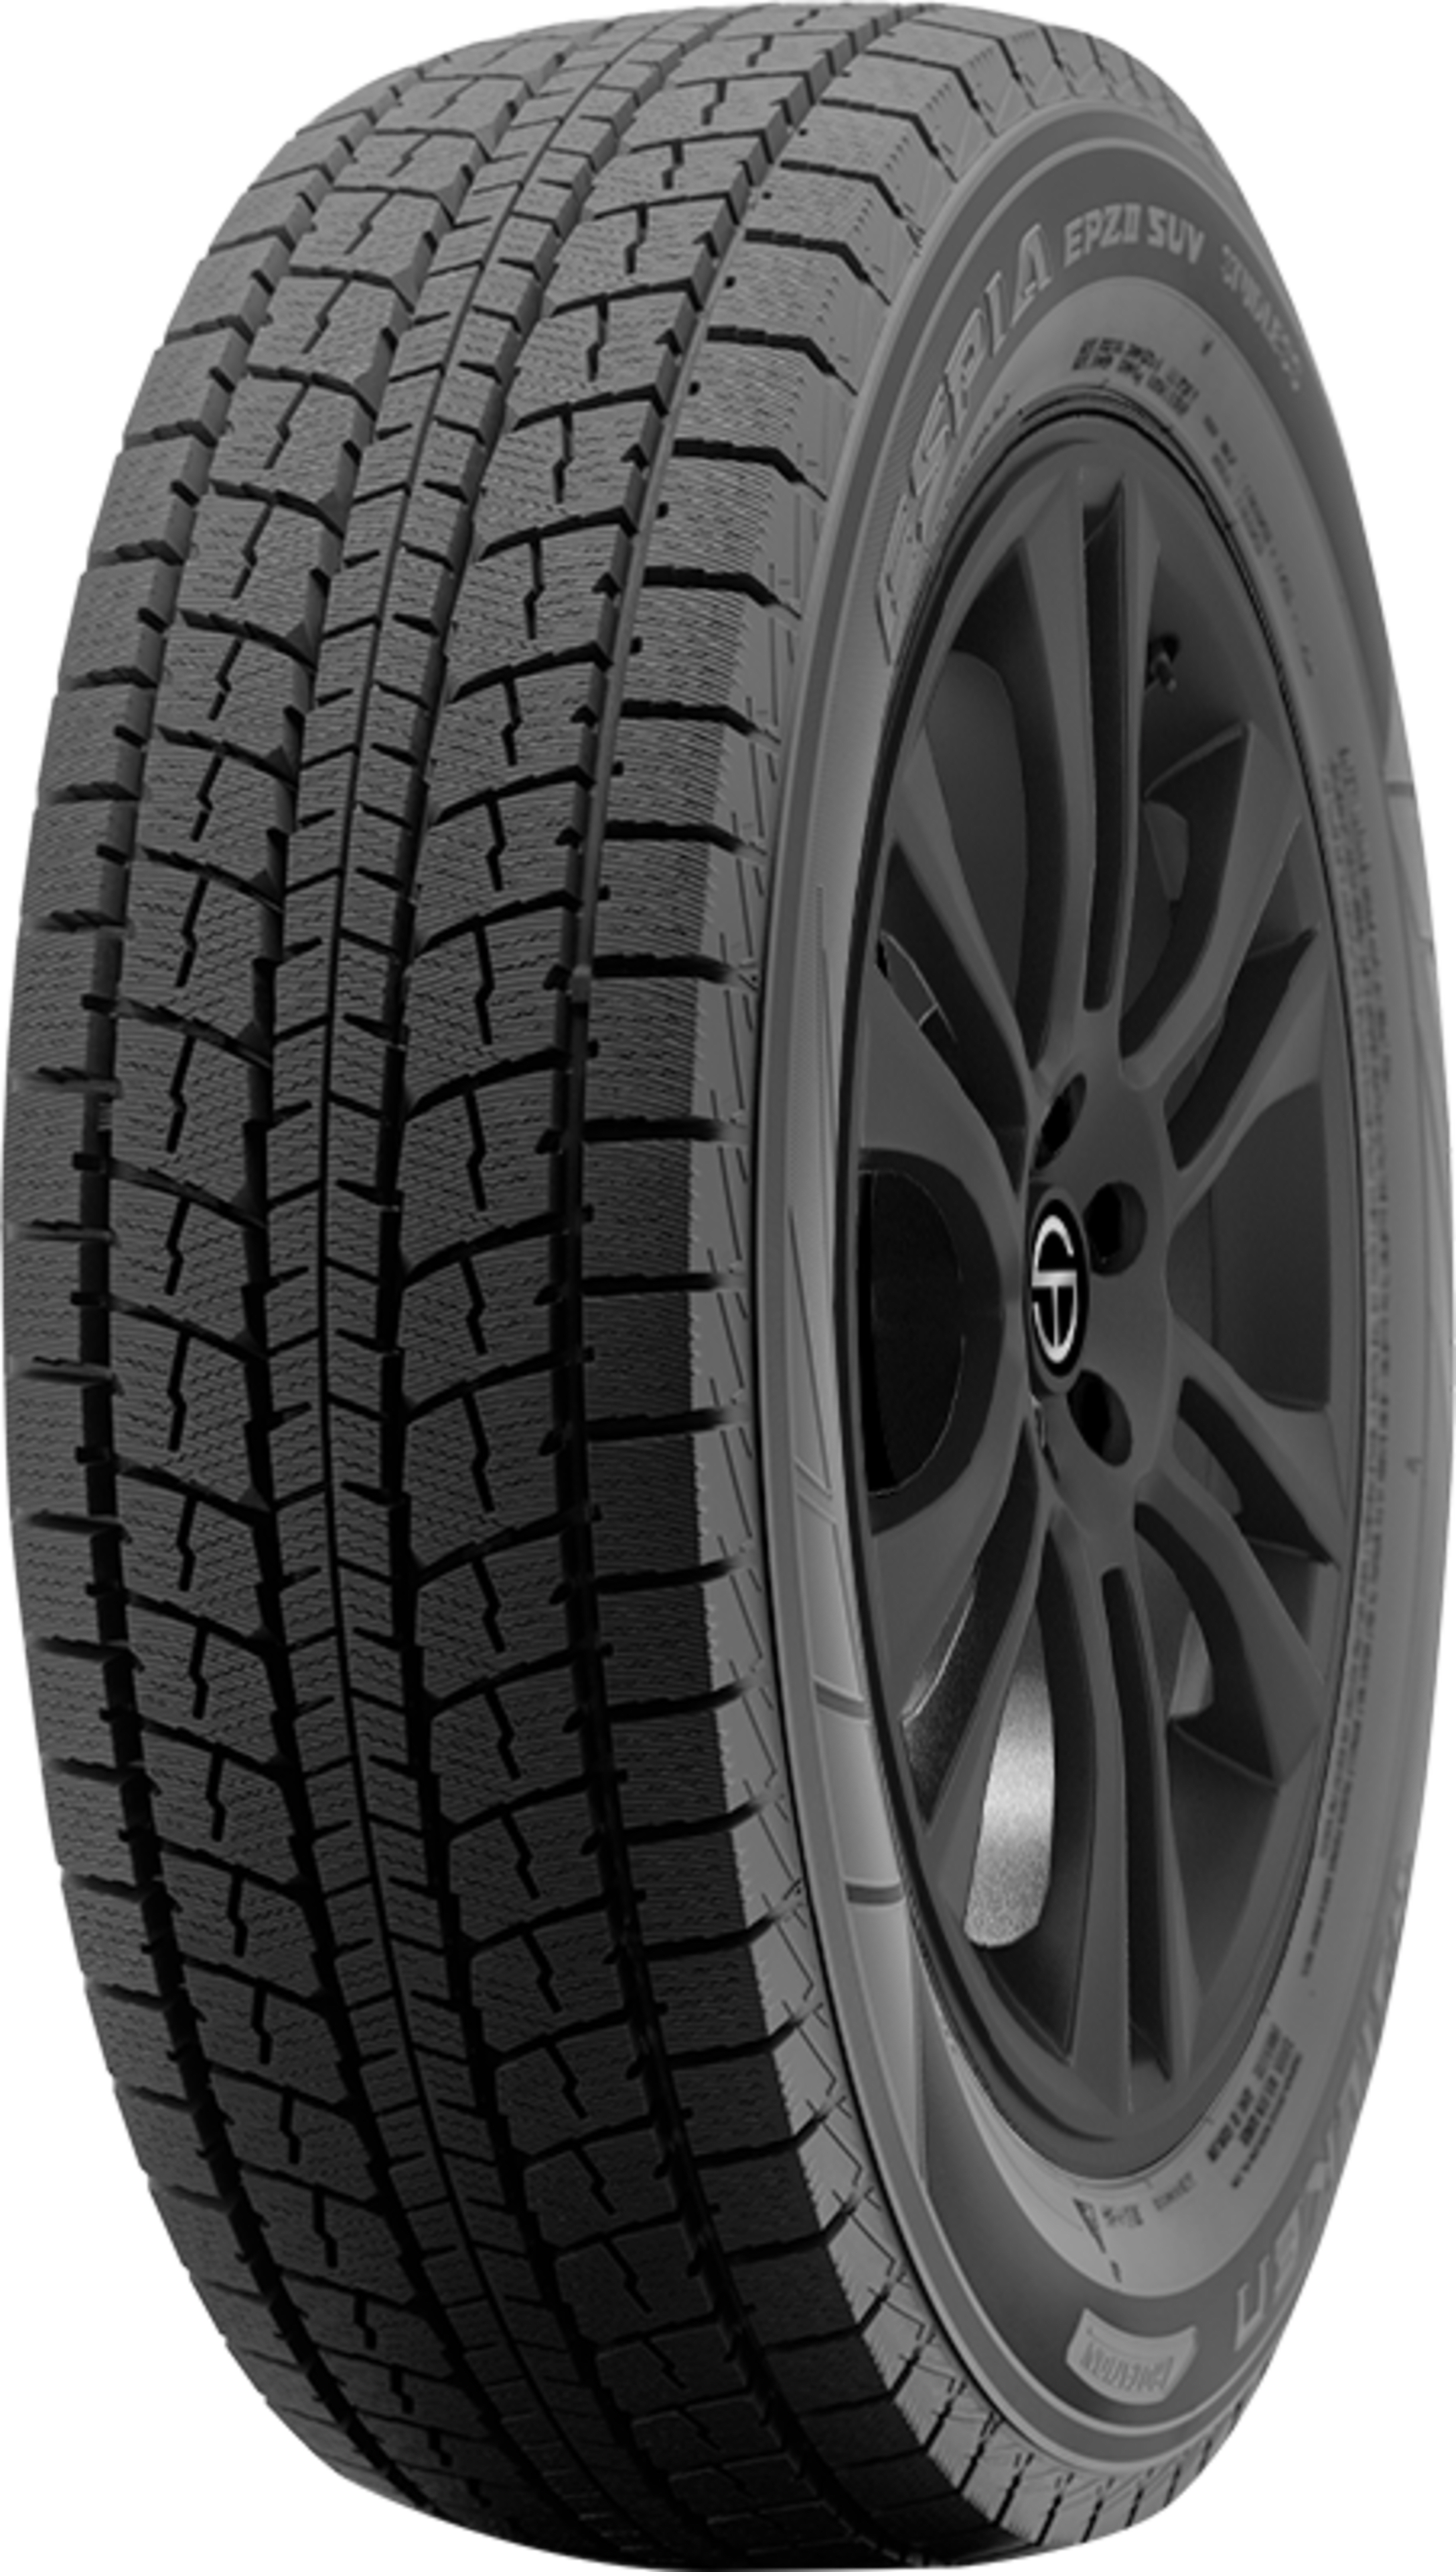 Buy Falken Espia EPZ II SUV Tires Online | SimpleTire